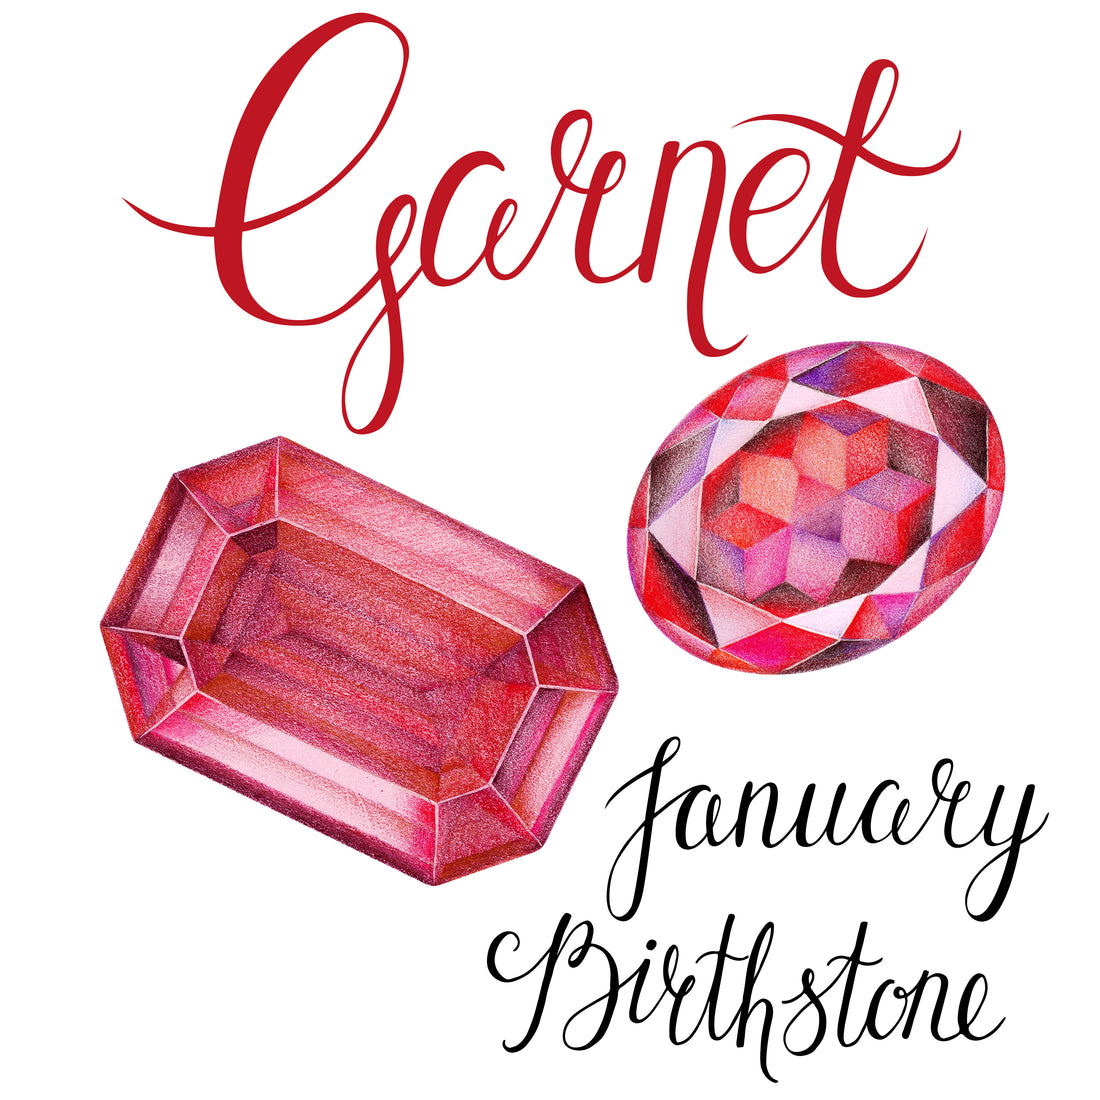 January Birthstones - Gorgeous Garnet and the Alternative Birthstones